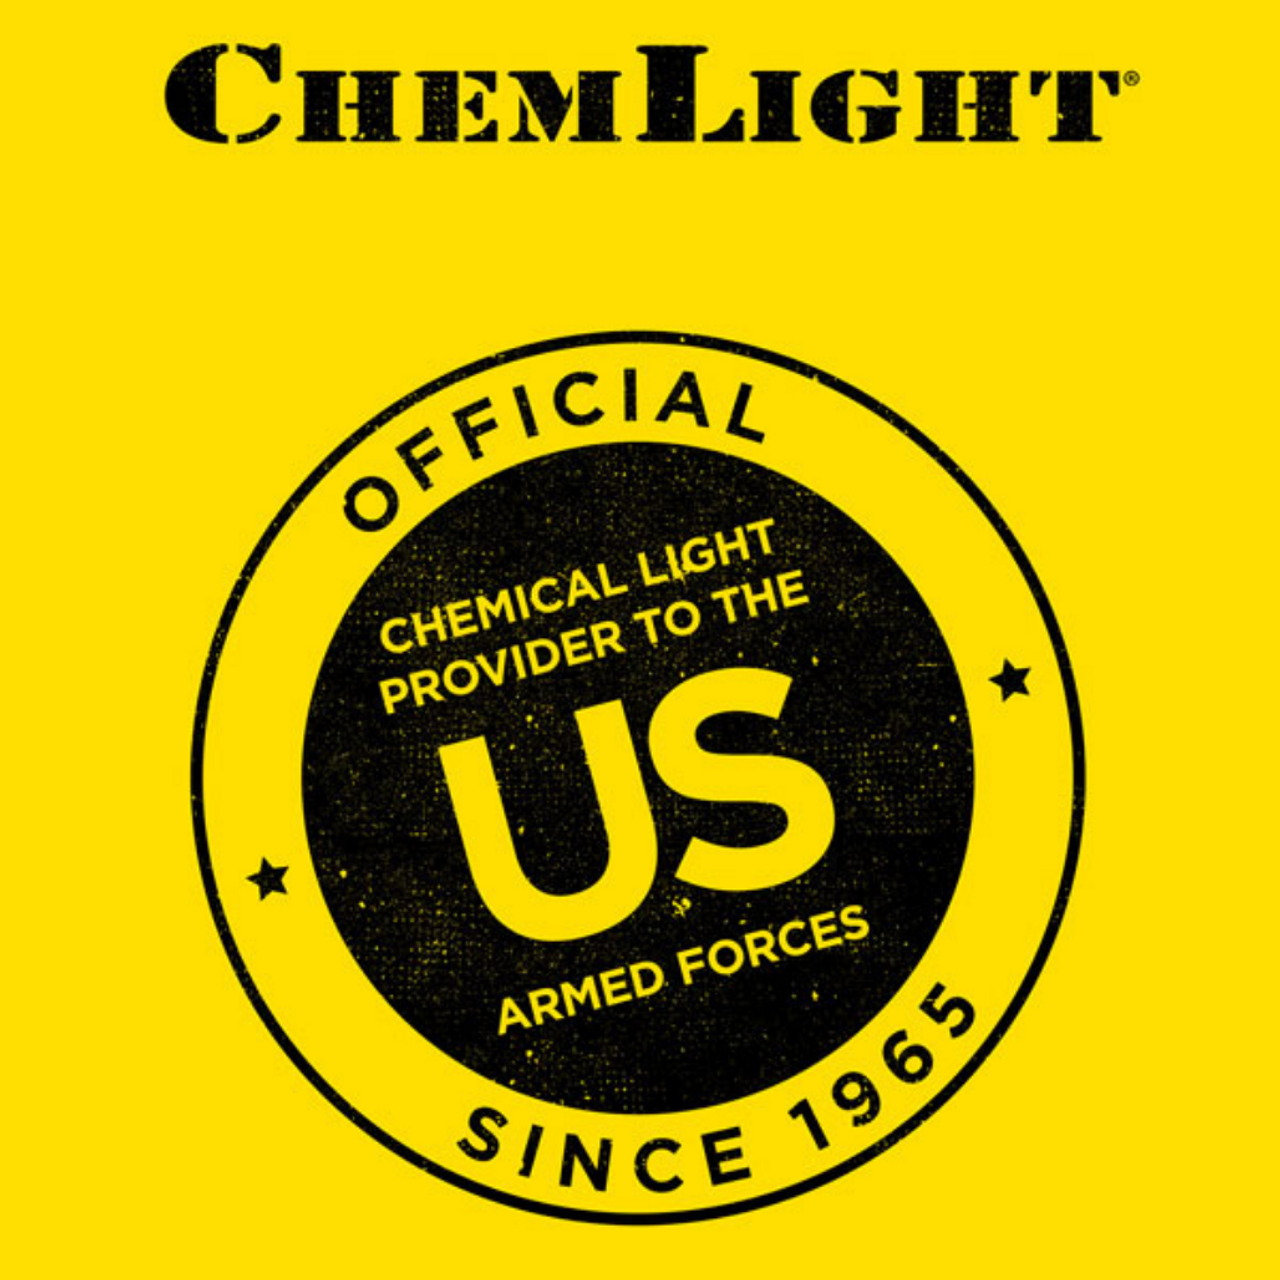 6 Inch Military Grade Infrared IR Glow Sticks - 10